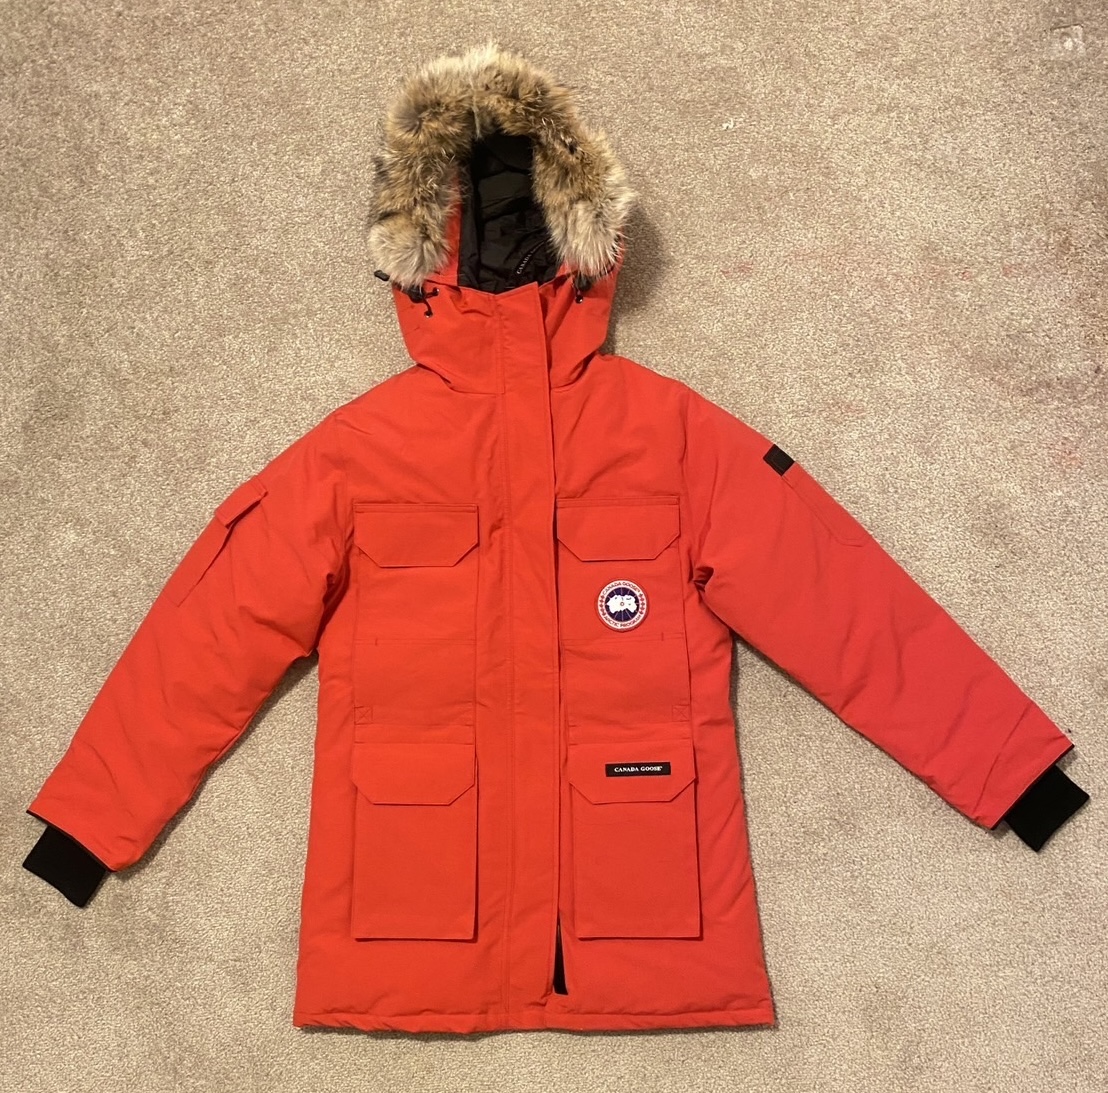 Winter Clothing Rental – North Star Adventures